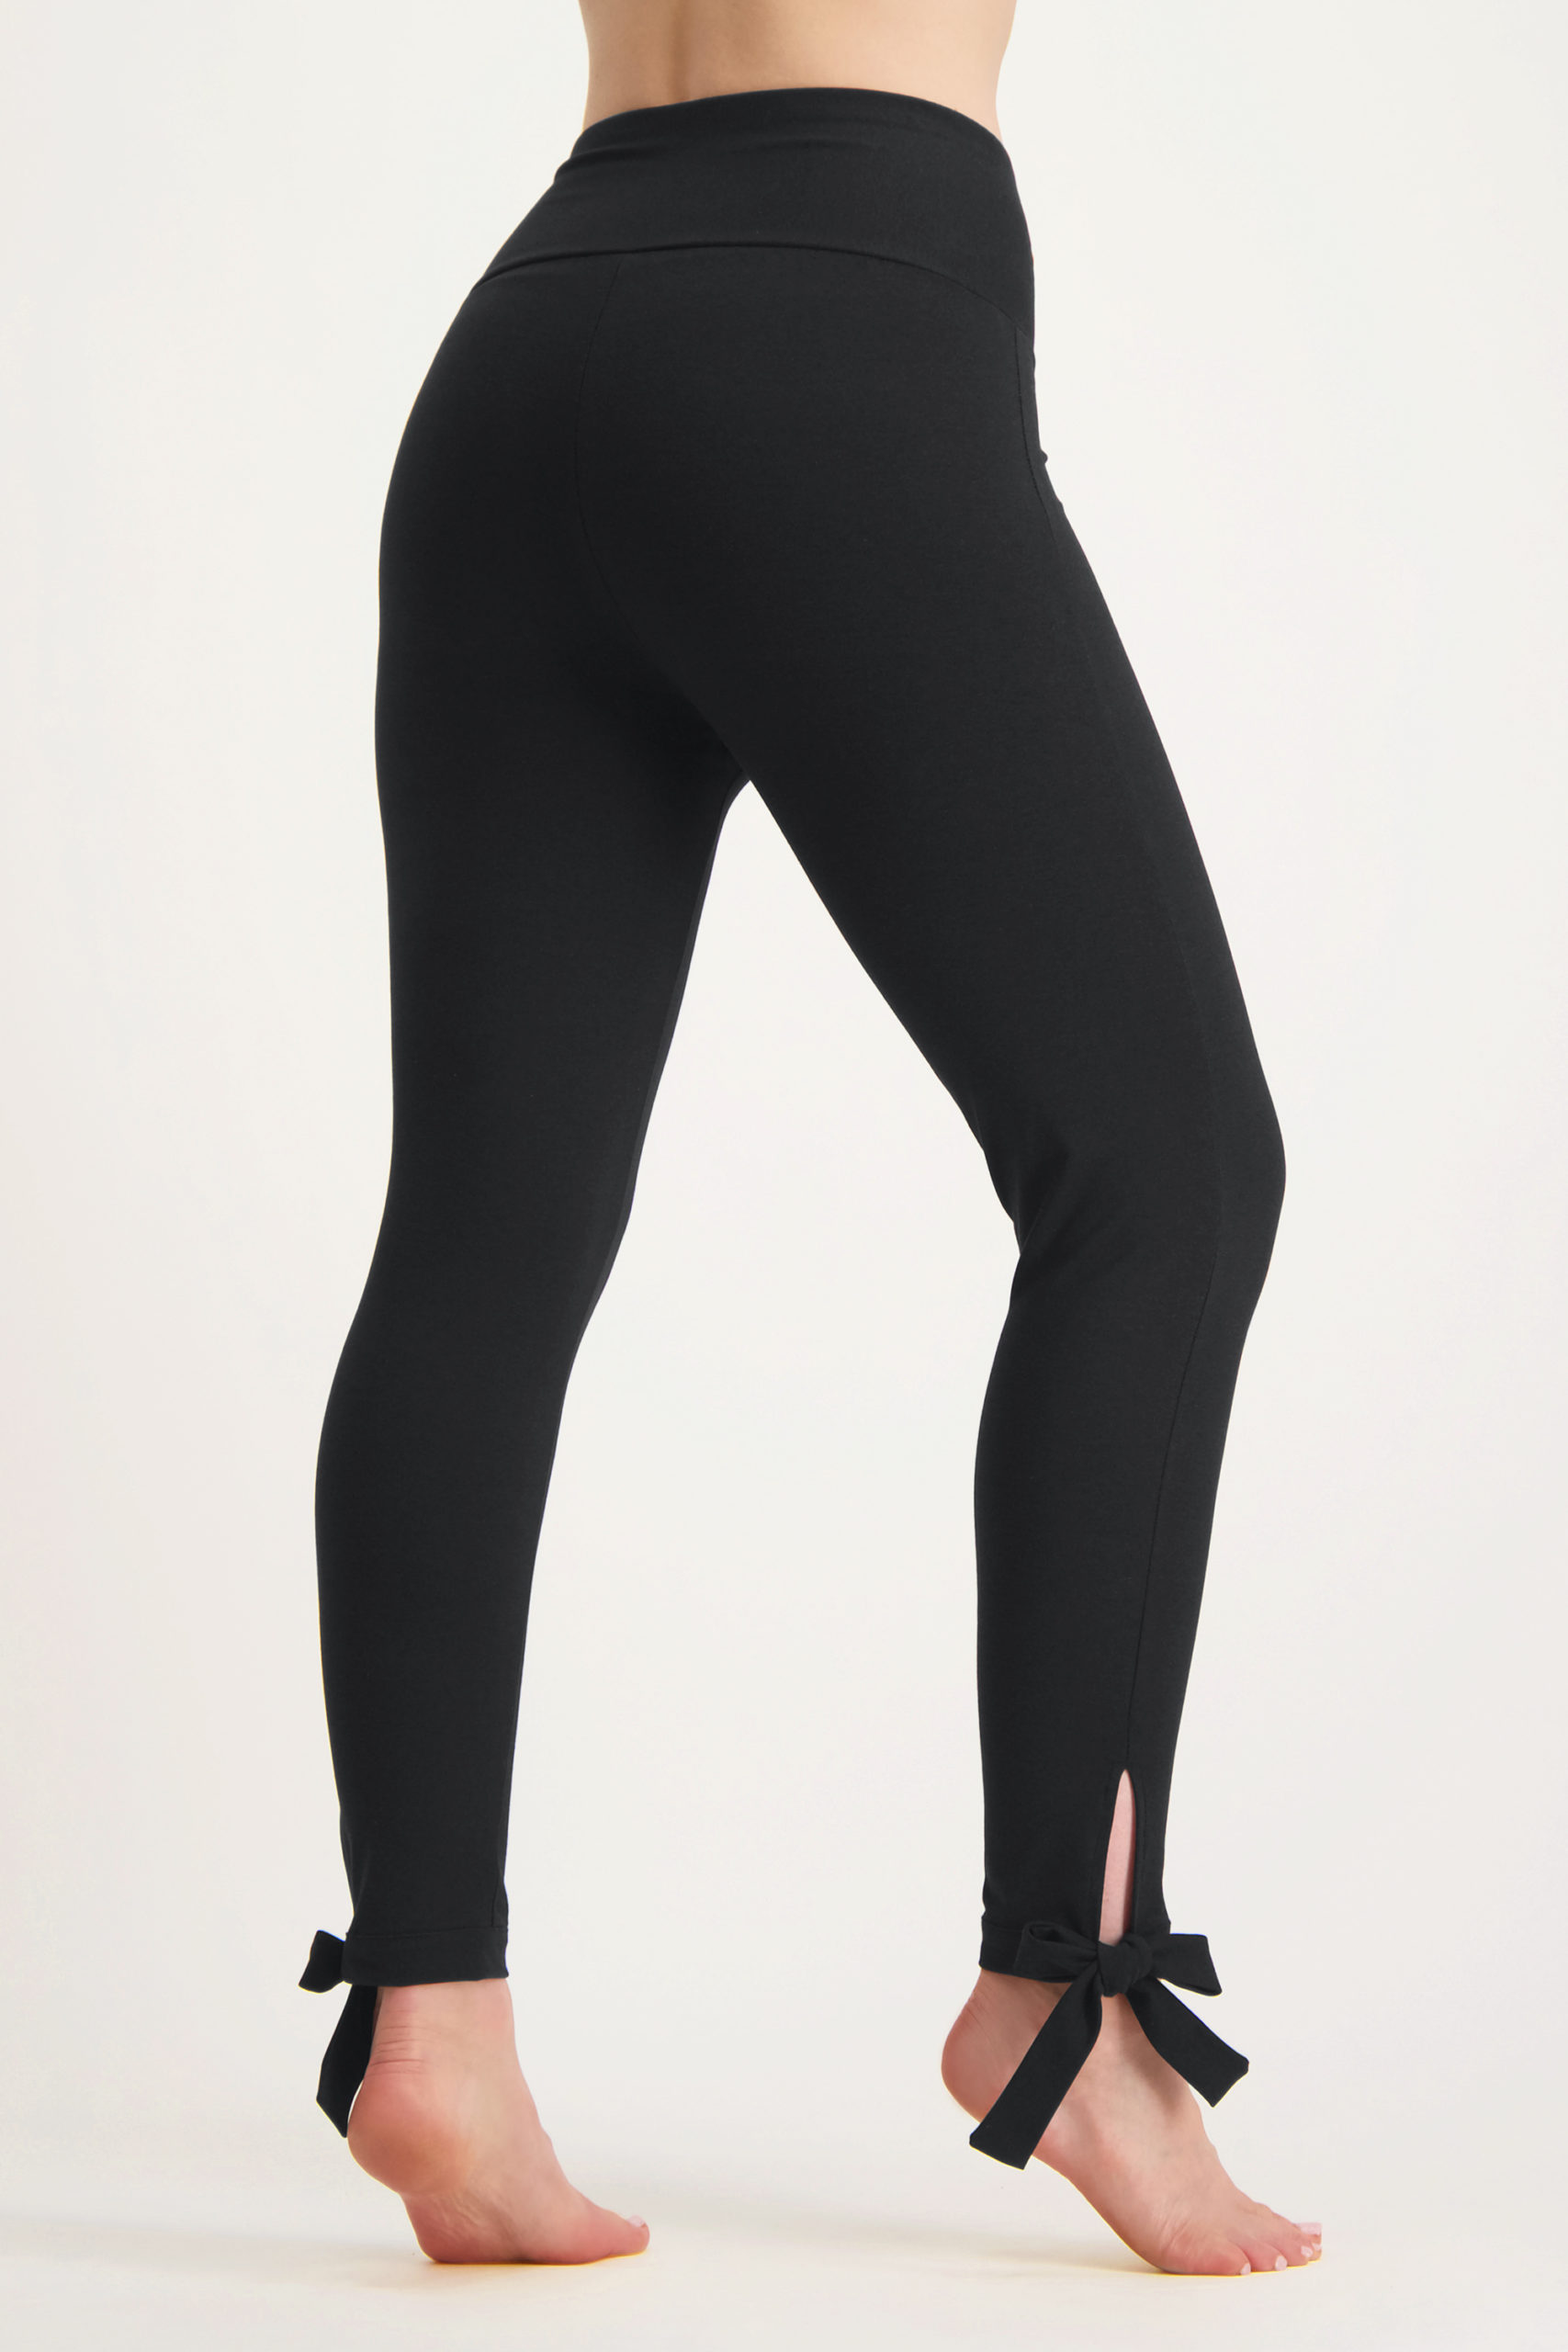 Svaha hip loose fit yoga pants-urban black-13435501-back-model